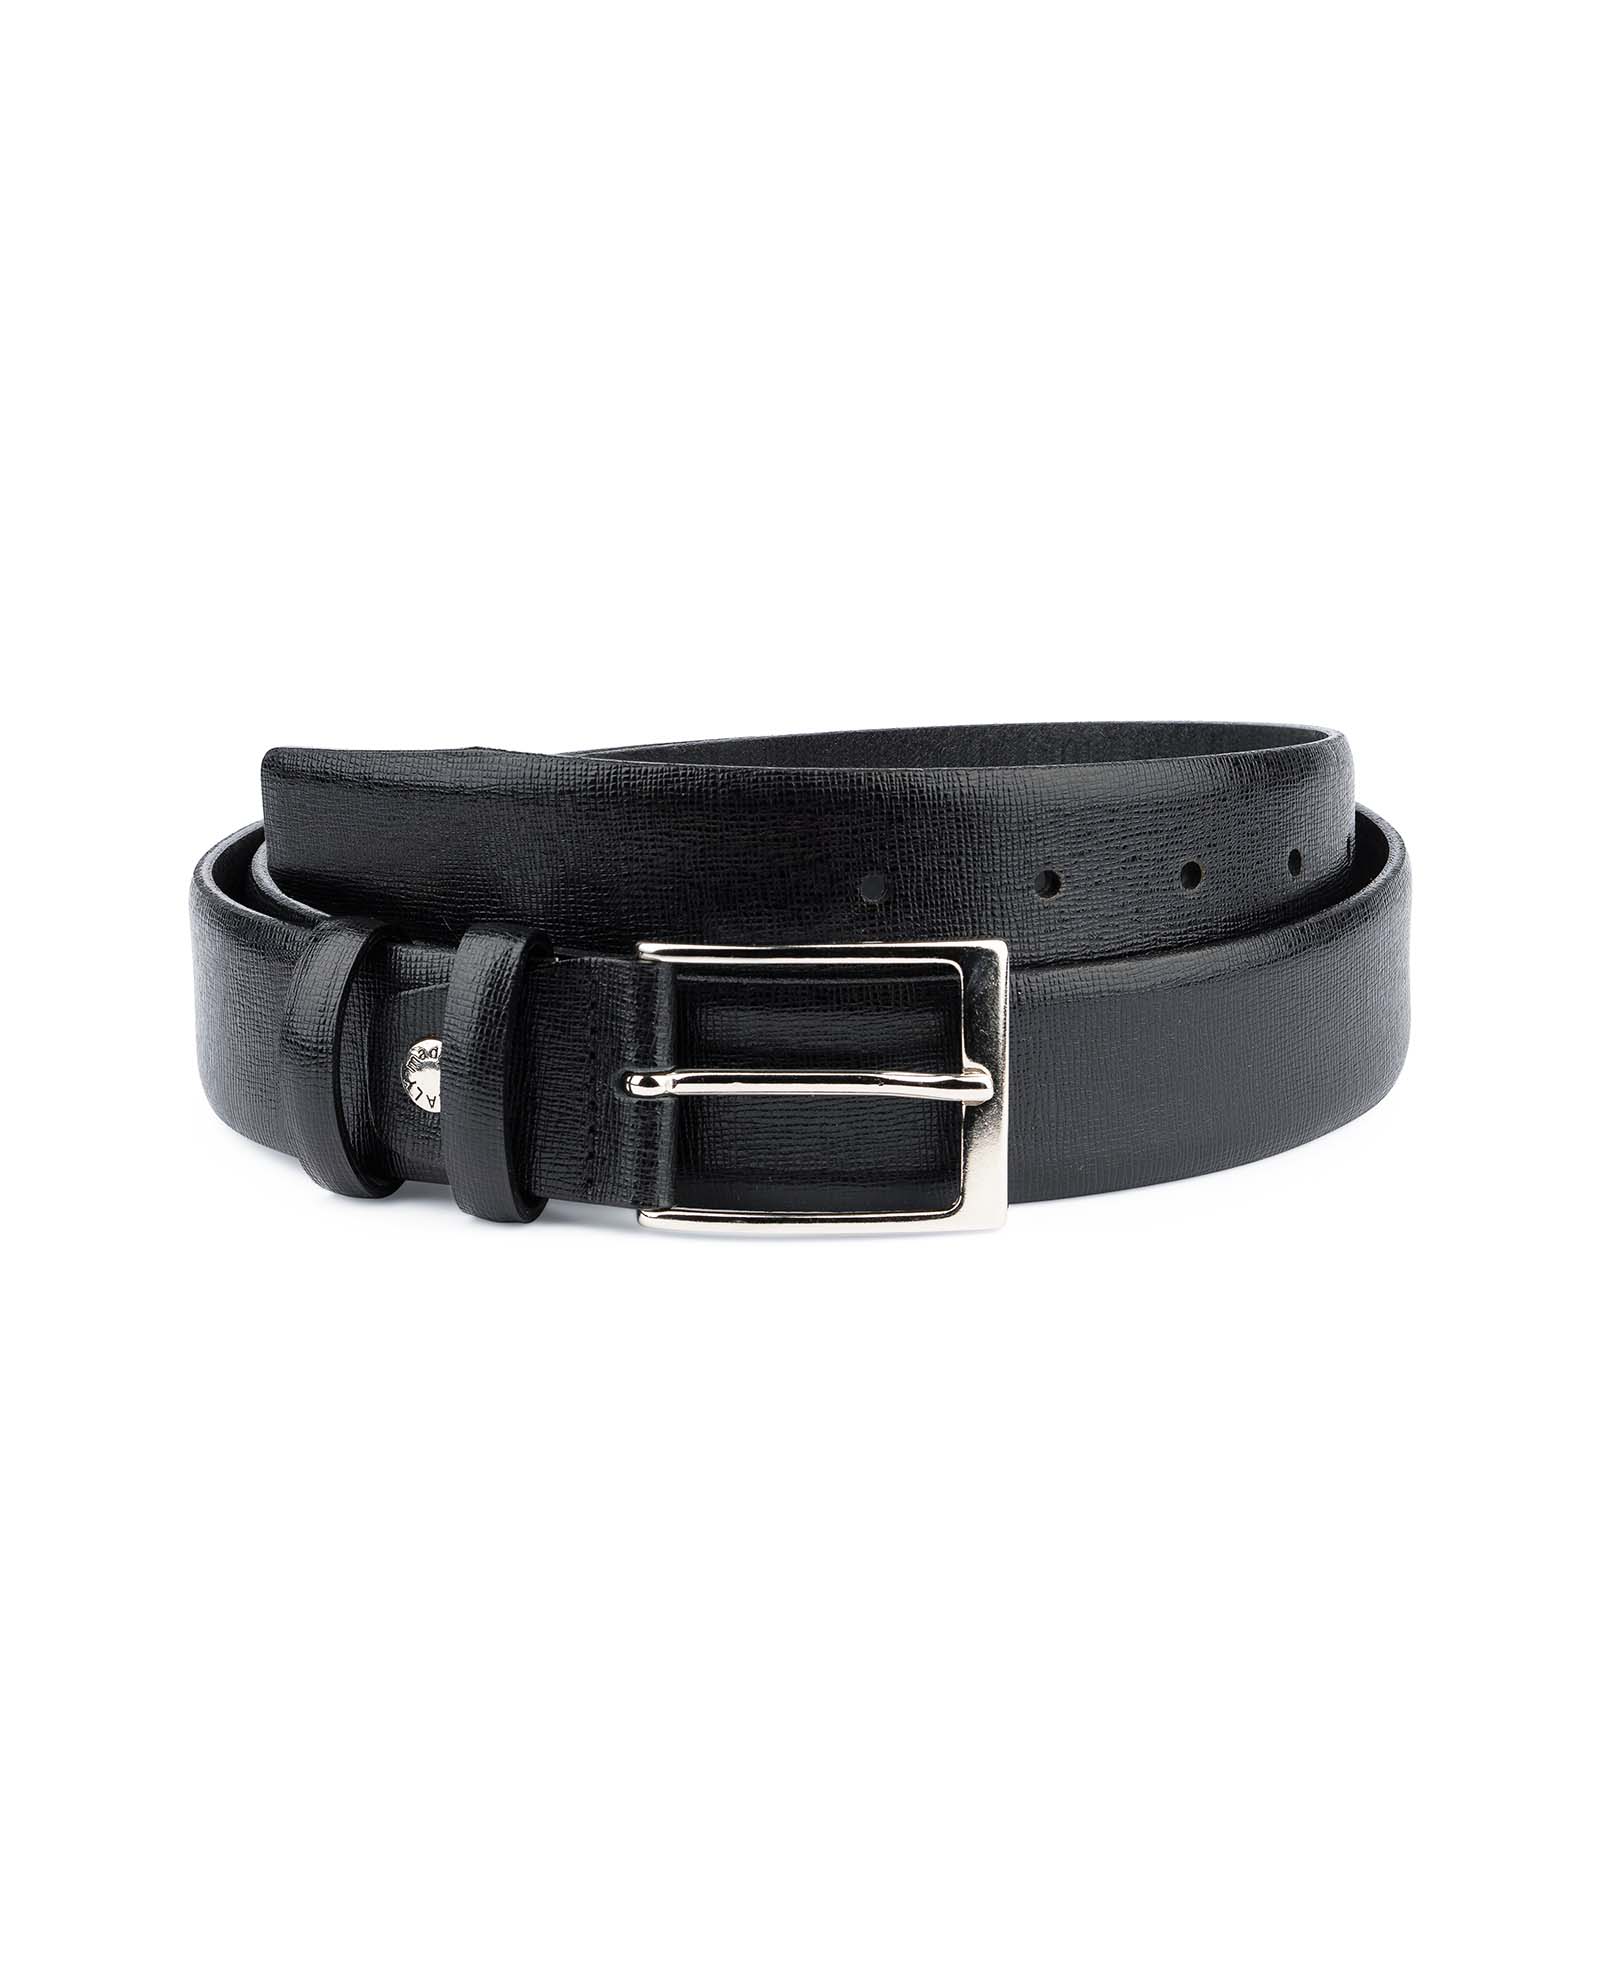 Buy Black Men's Dress Belt | Saffiano Leather | LeatherBeltsOnline.com